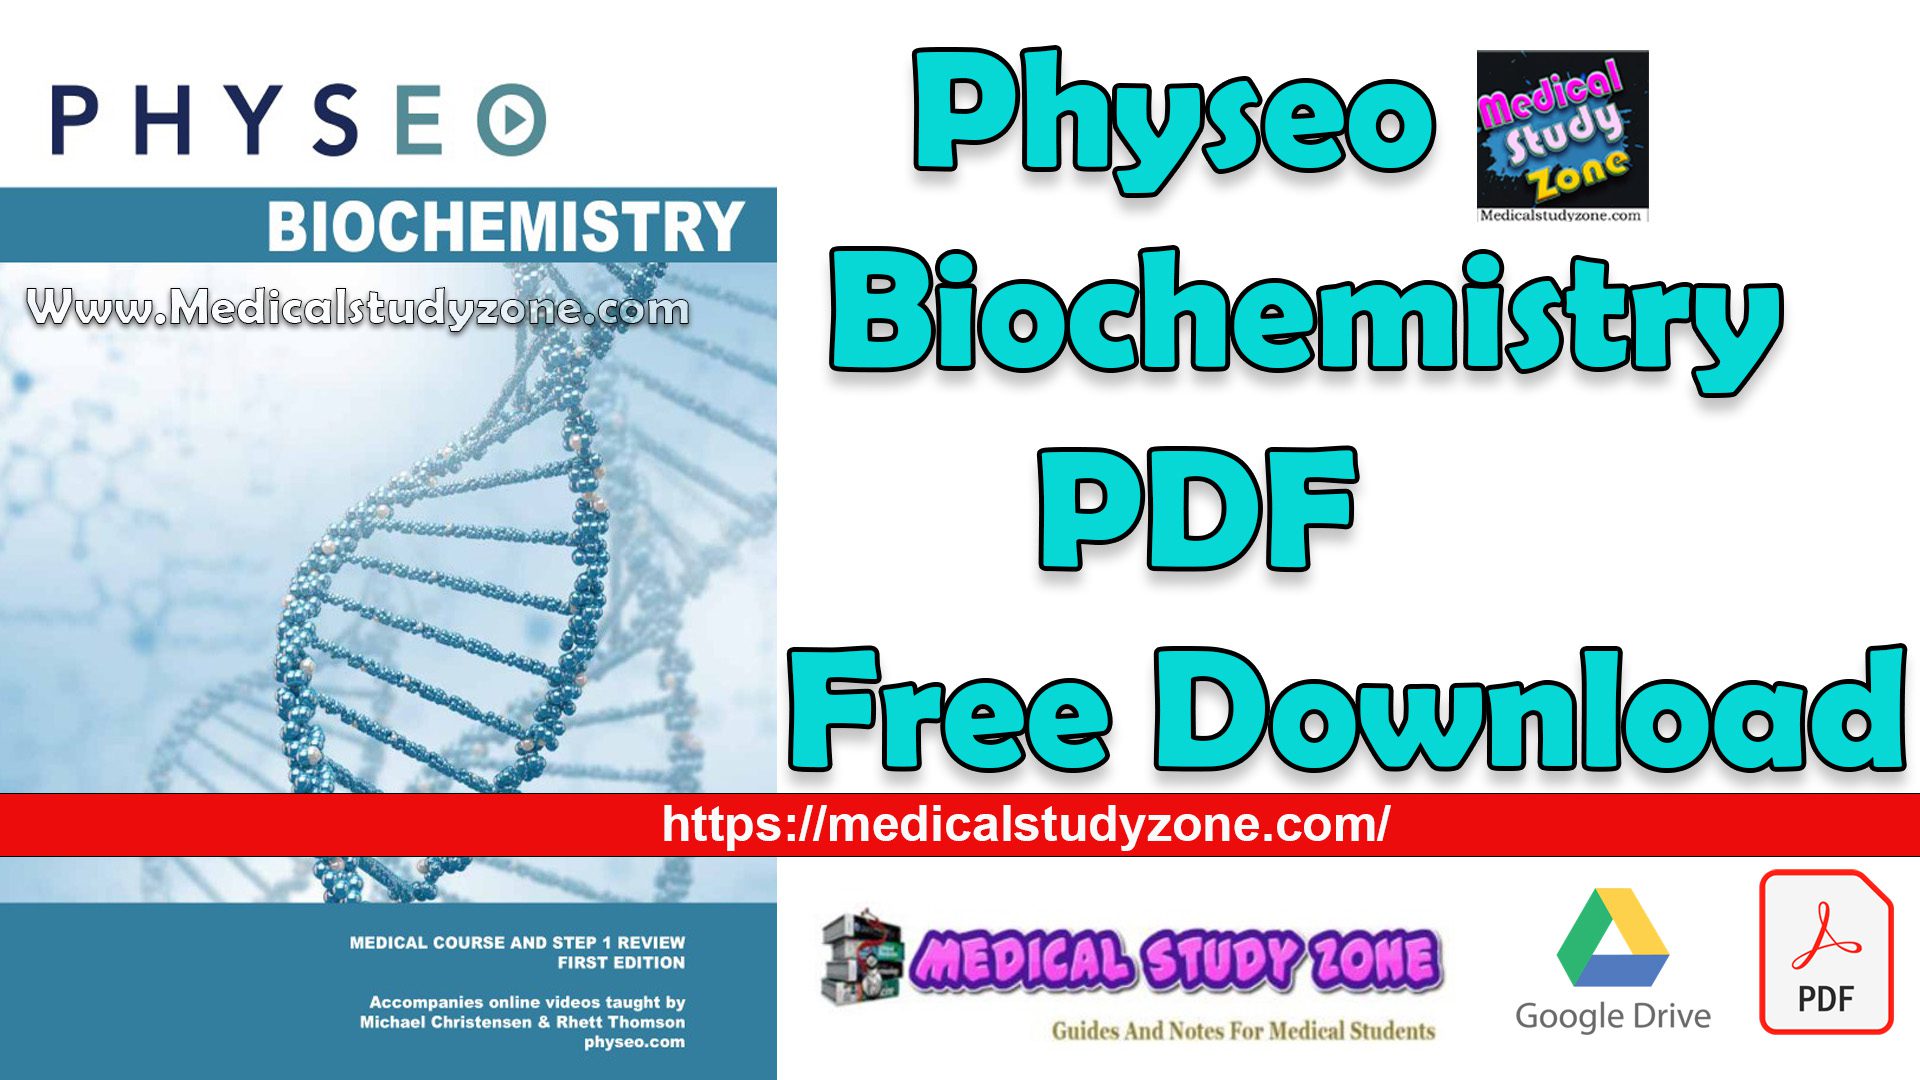 Physeo Biochemistry PDF Free Download